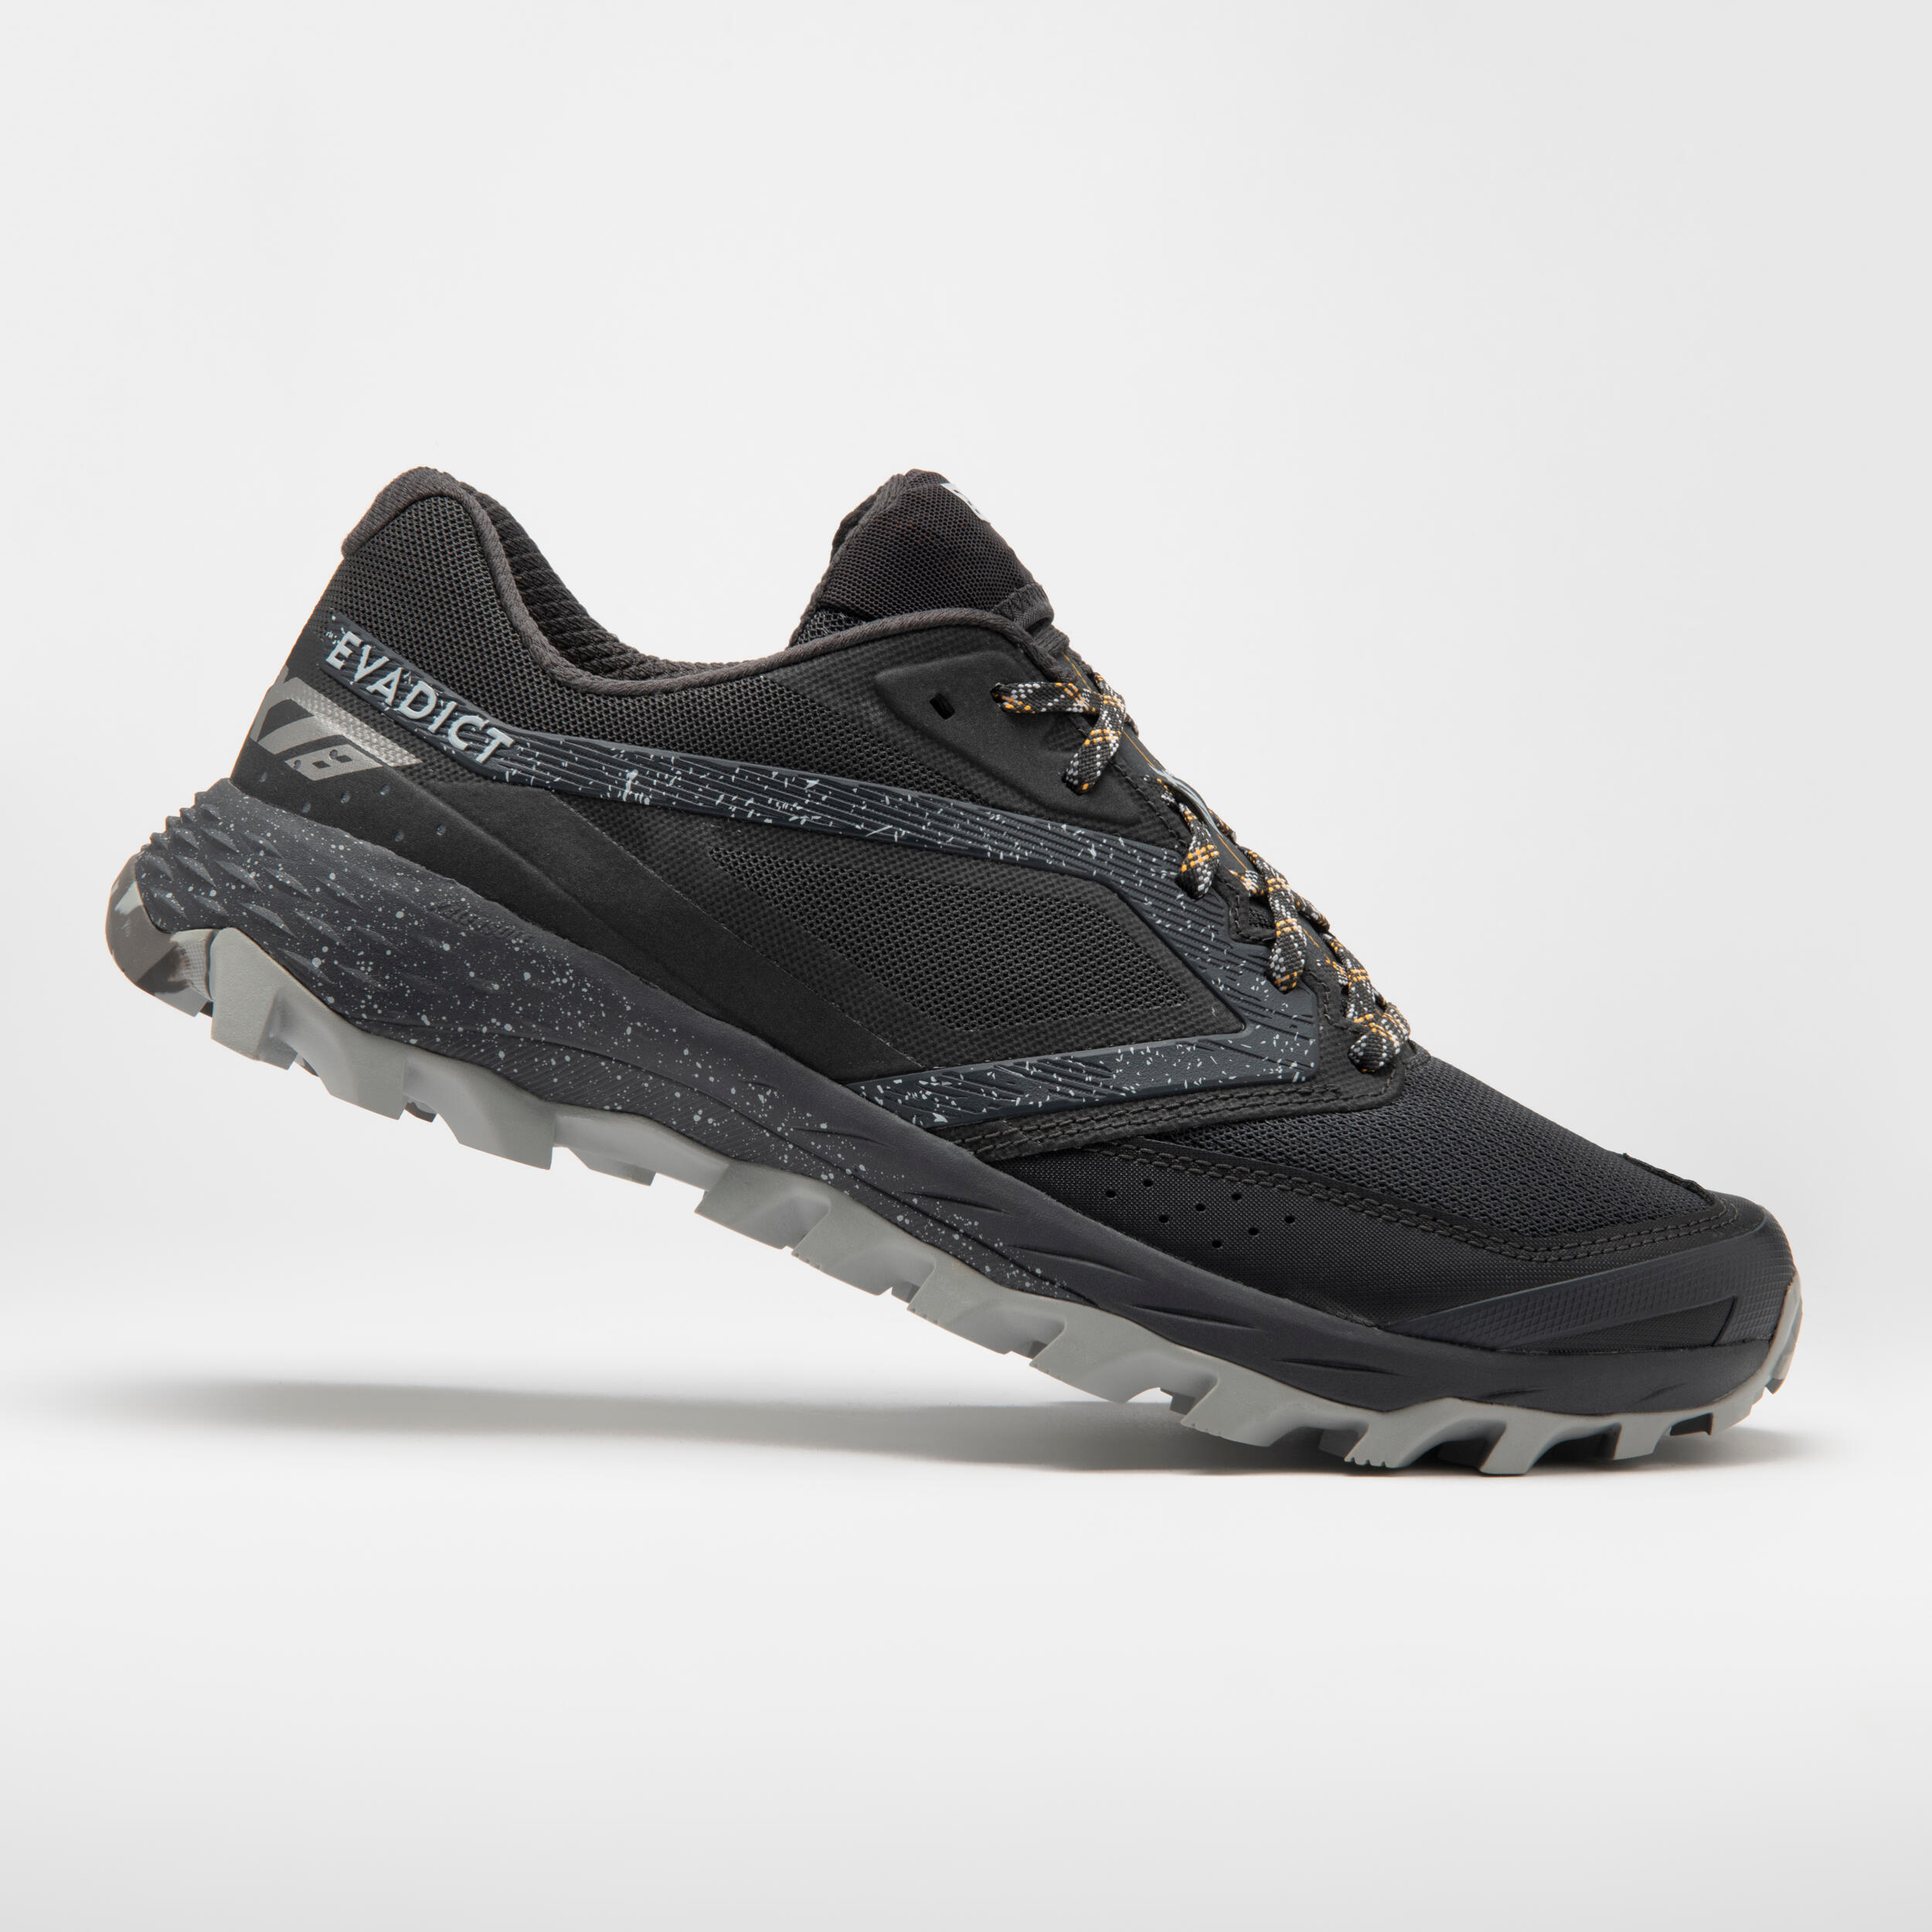 KIPRUN XT8 men's trail running shoes black and grey